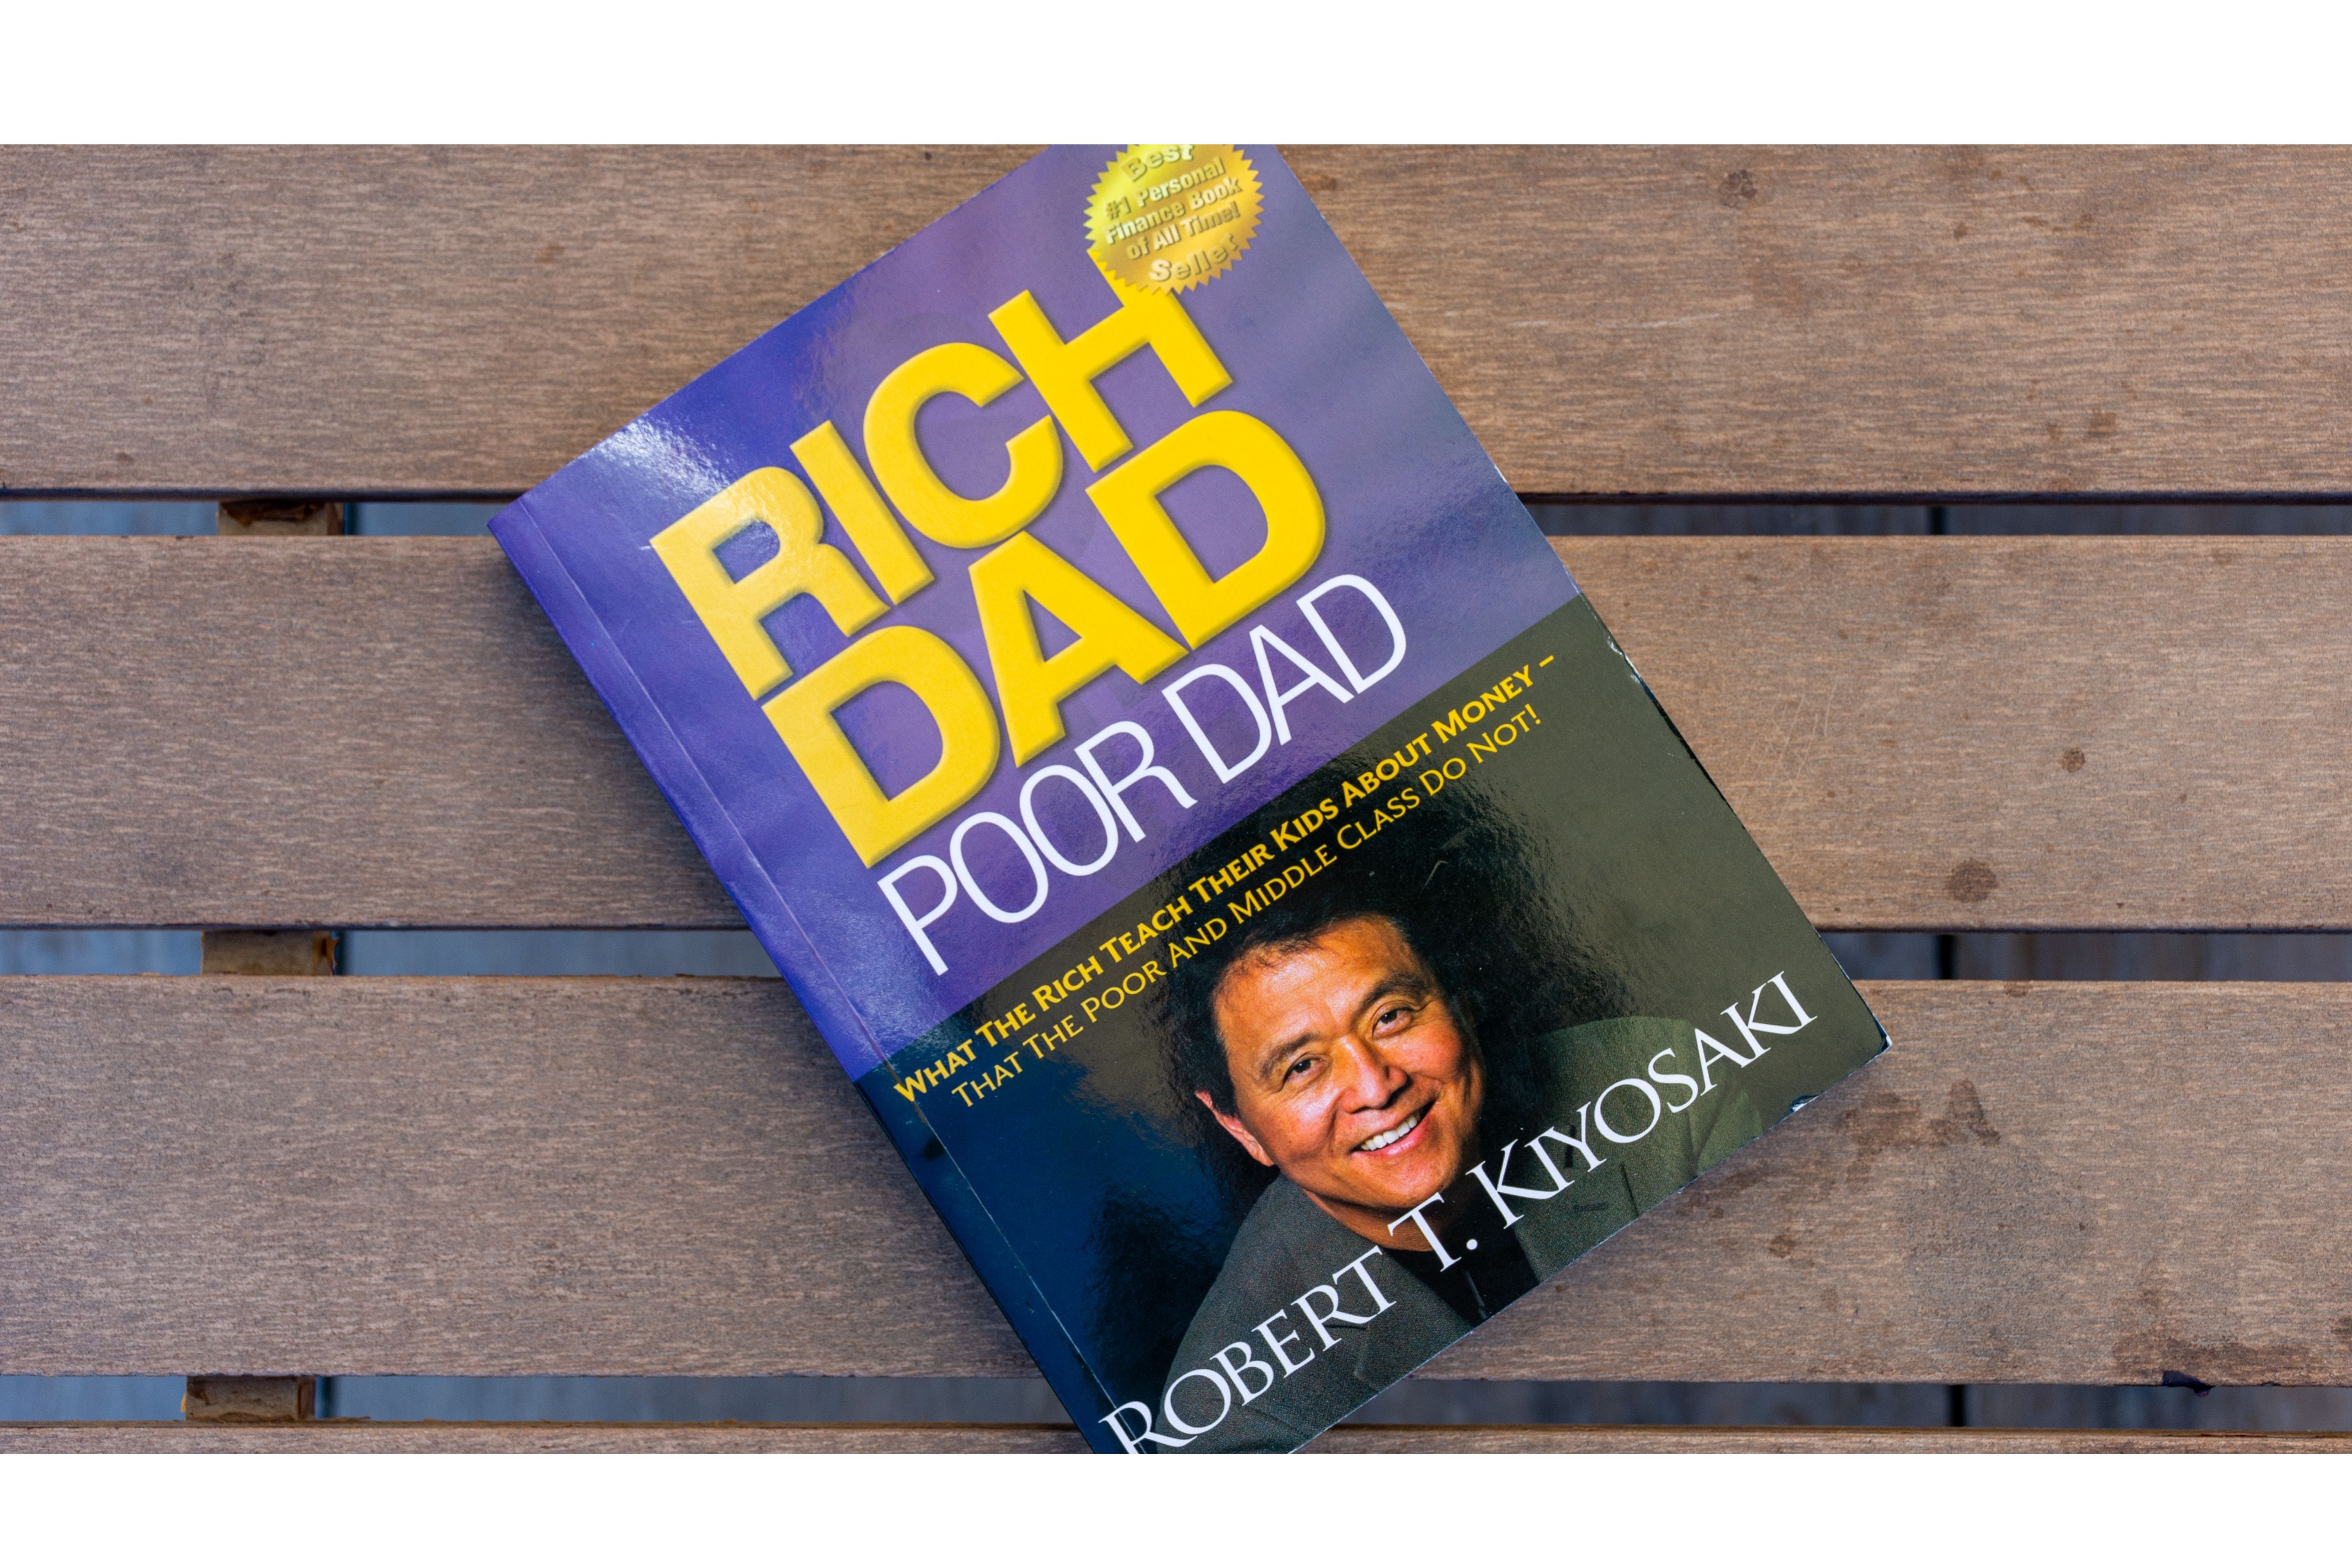 An image of the book, 'Rich Dad, Poor Dad' by Robert Kiyosaki